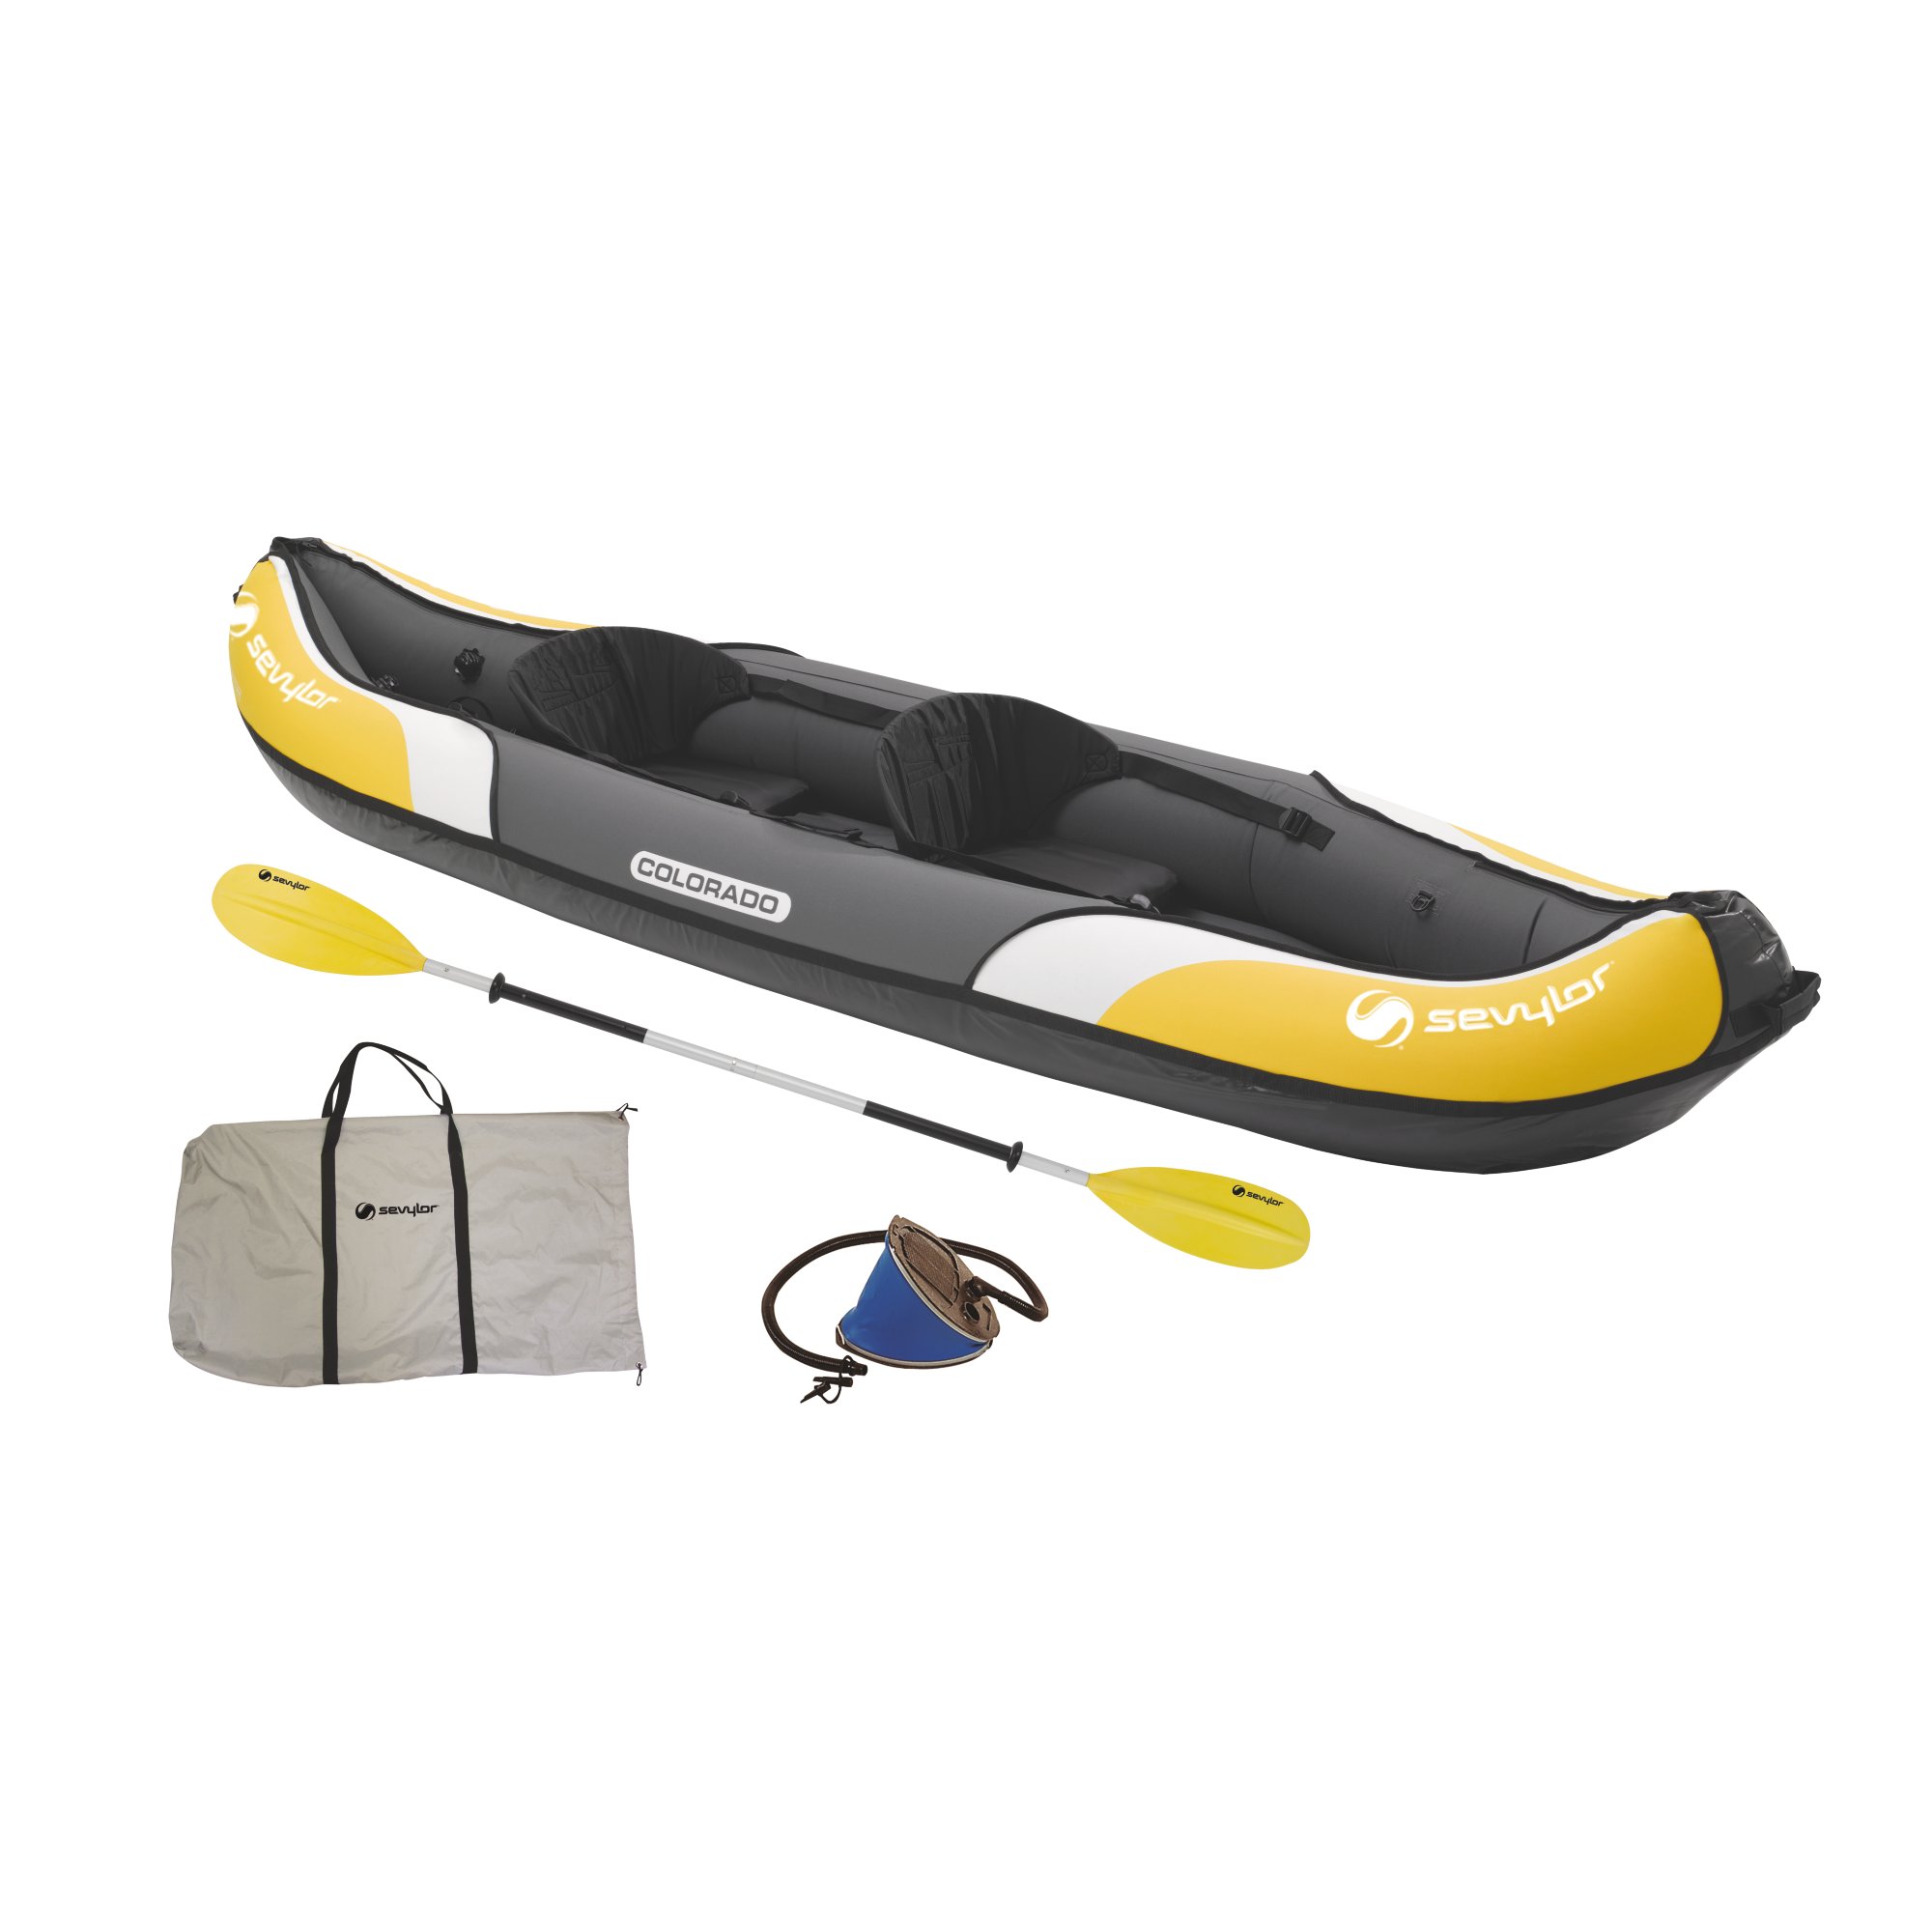 Colorado Kit Inflatable Kayak